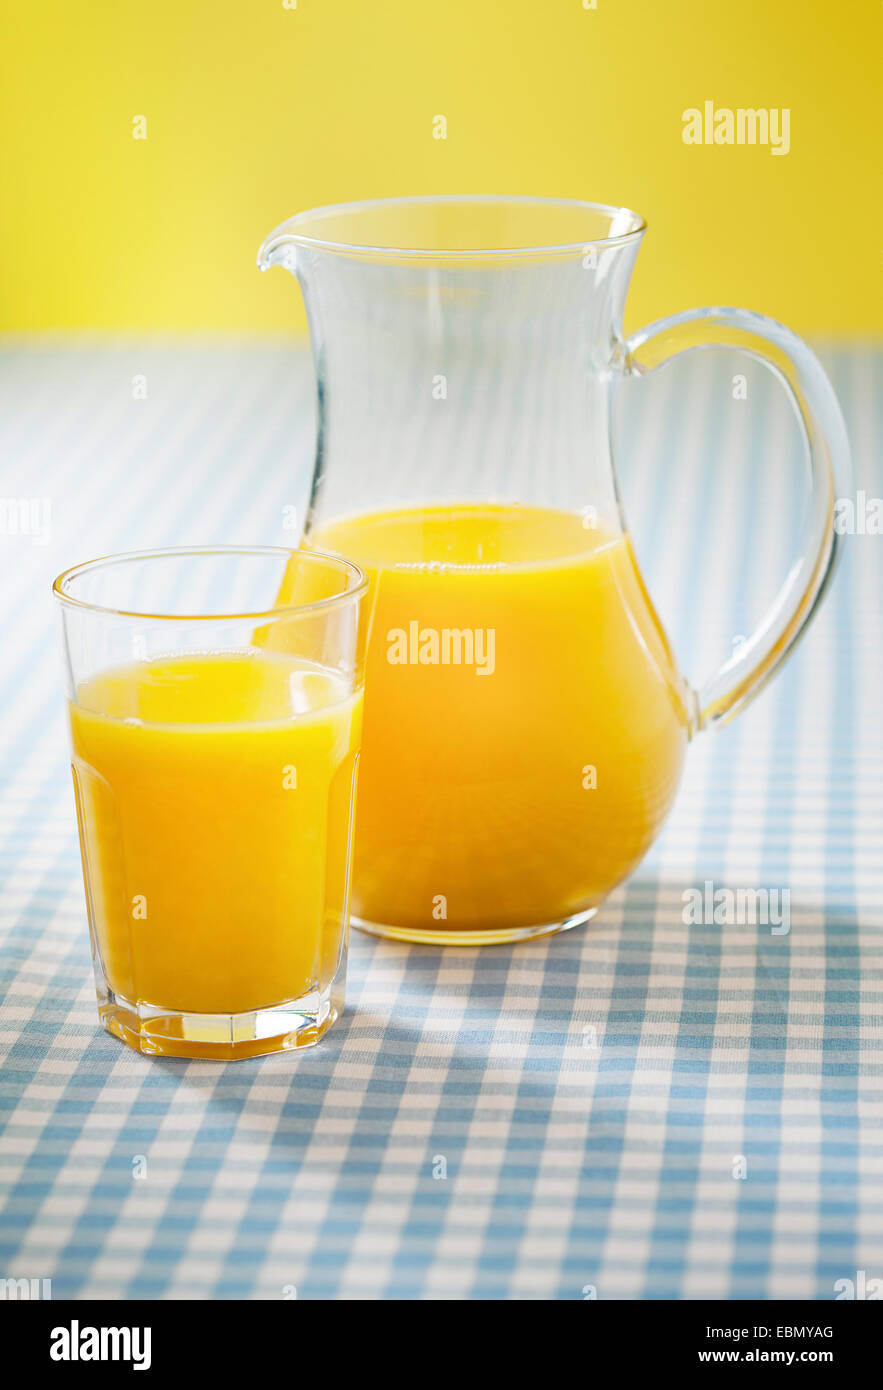 https://c8.alamy.com/comp/EBMYAG/a-glass-and-pitcher-with-orange-juice-short-depth-of-field-EBMYAG.jpg